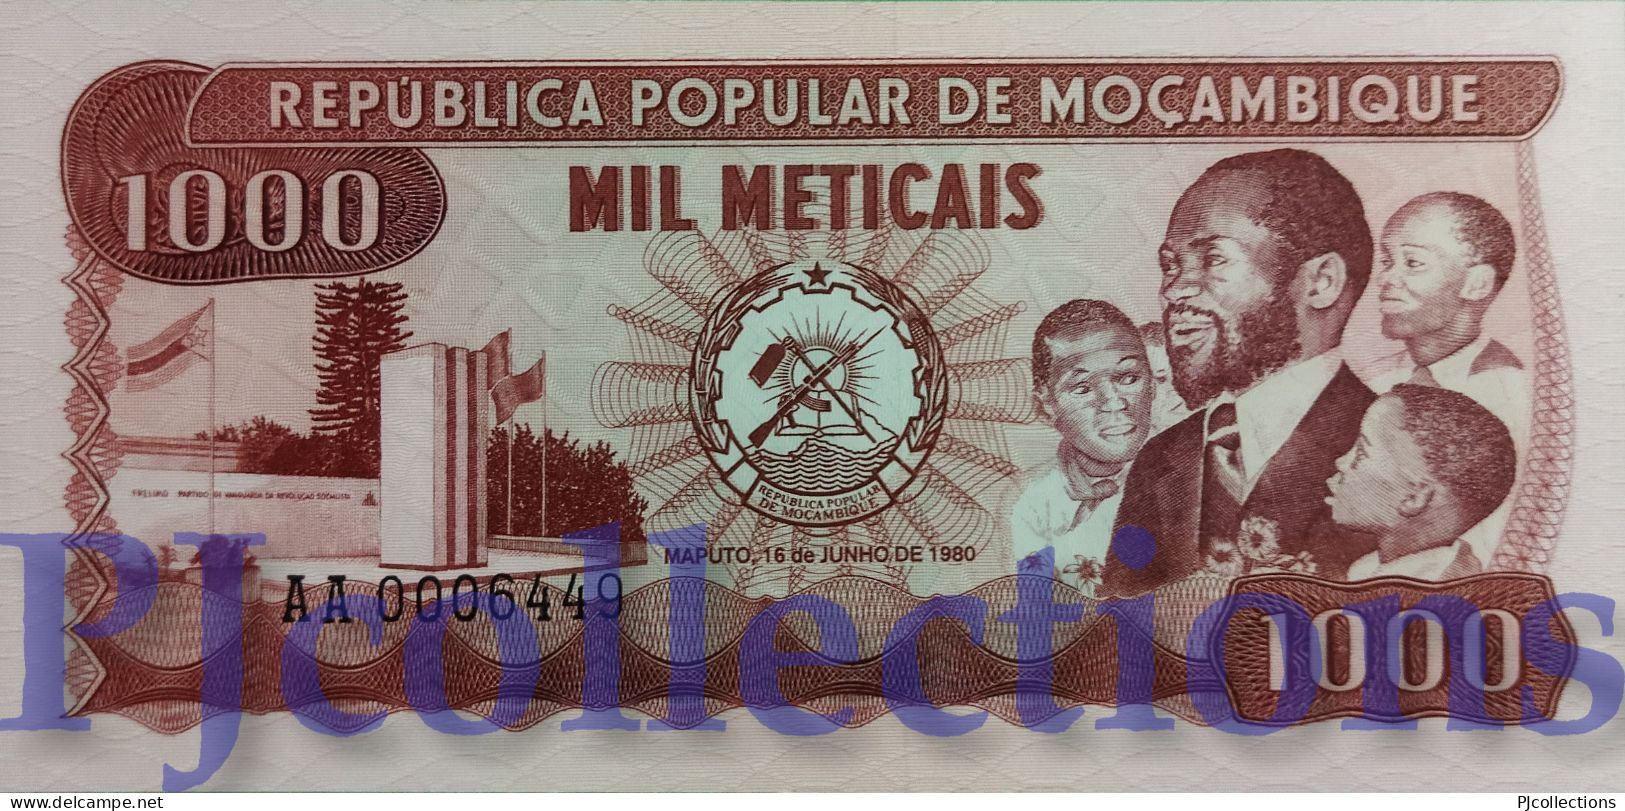 MOZAMBIQUE 1000 METICAIS 1980 PICK 128 UNC LOW SERIAL NUMBER "AA0006449" - Mozambique